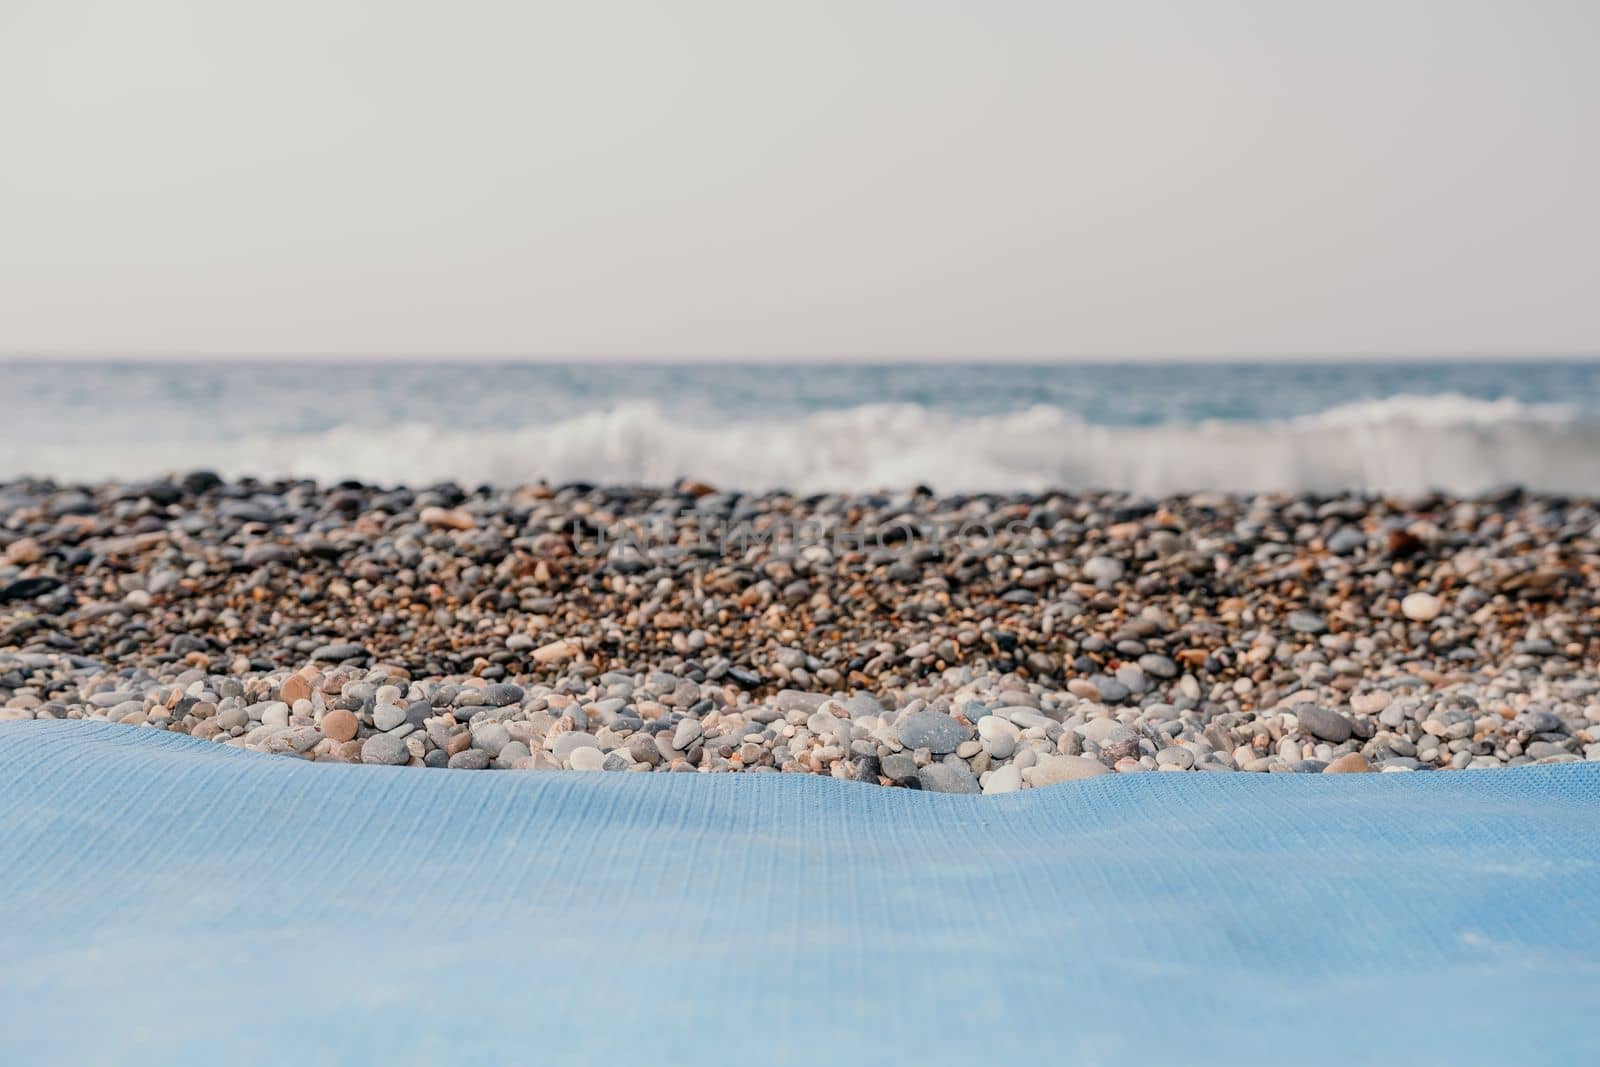 Blue yoga mat is on a sandy beach by the sea